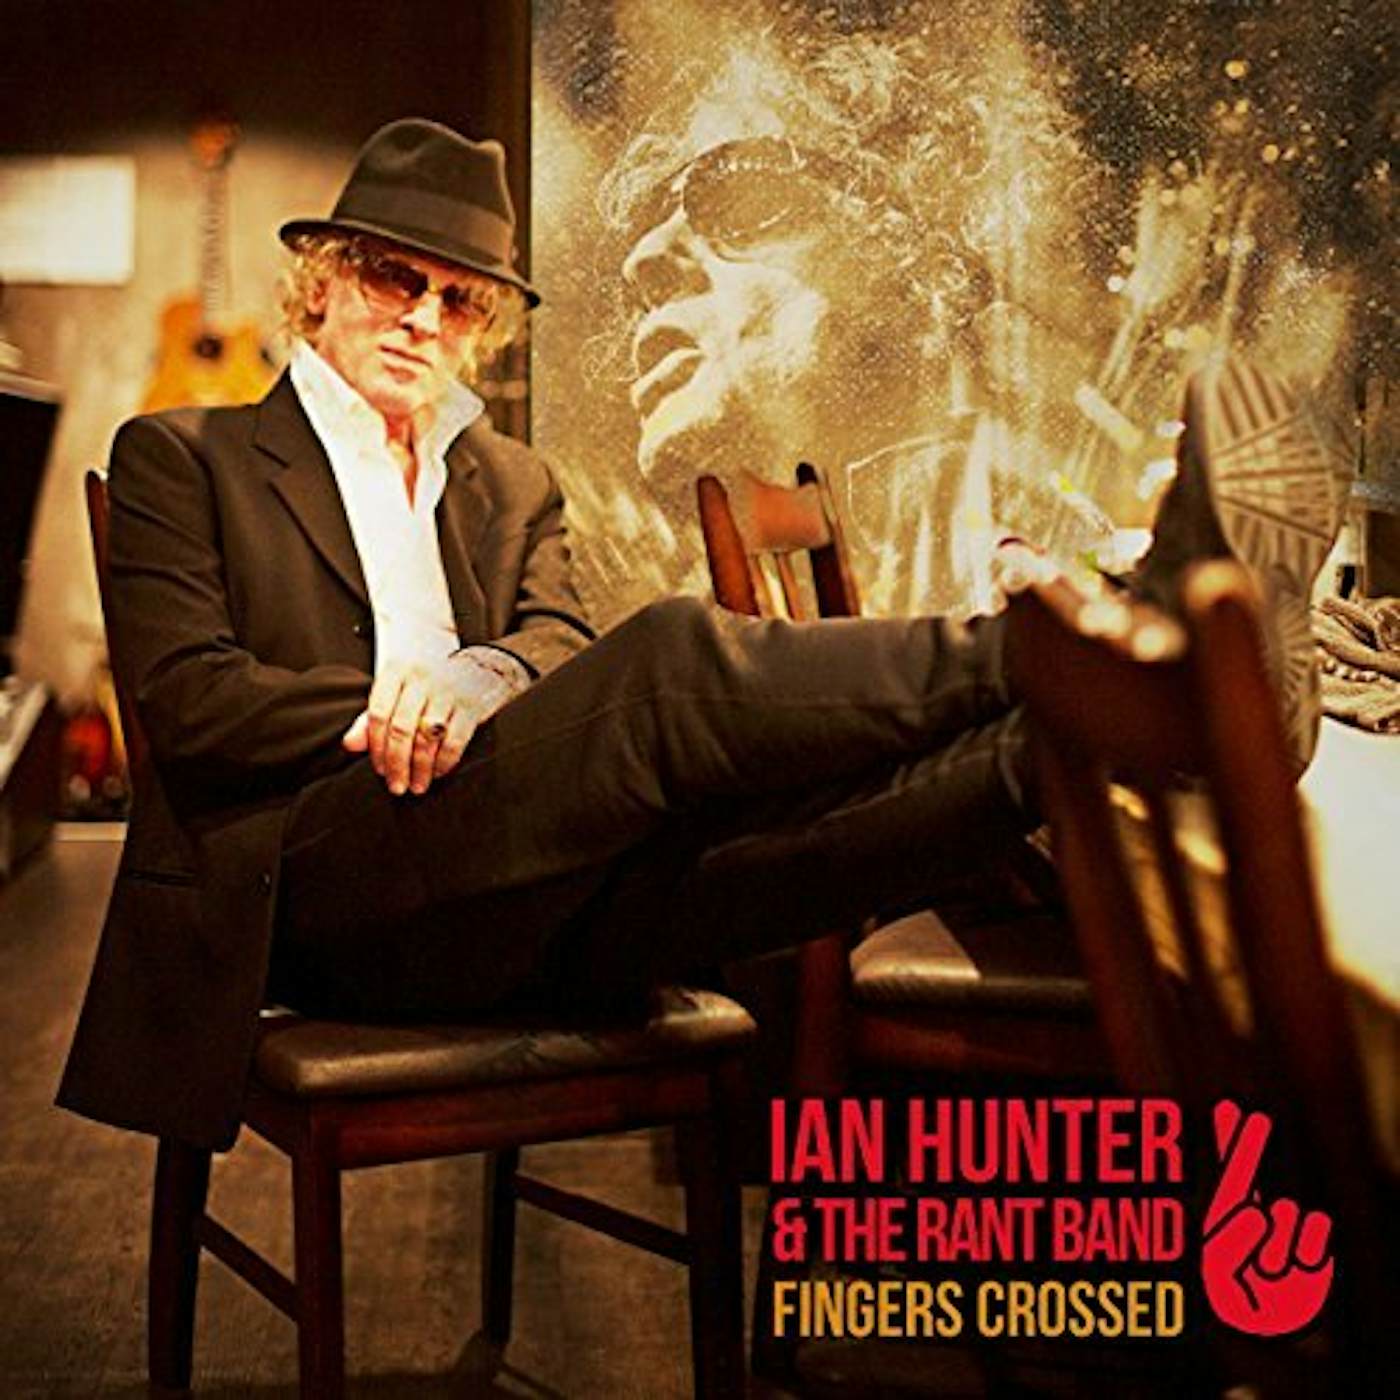 Ian Hunter Fingers Crossed Vinyl Record